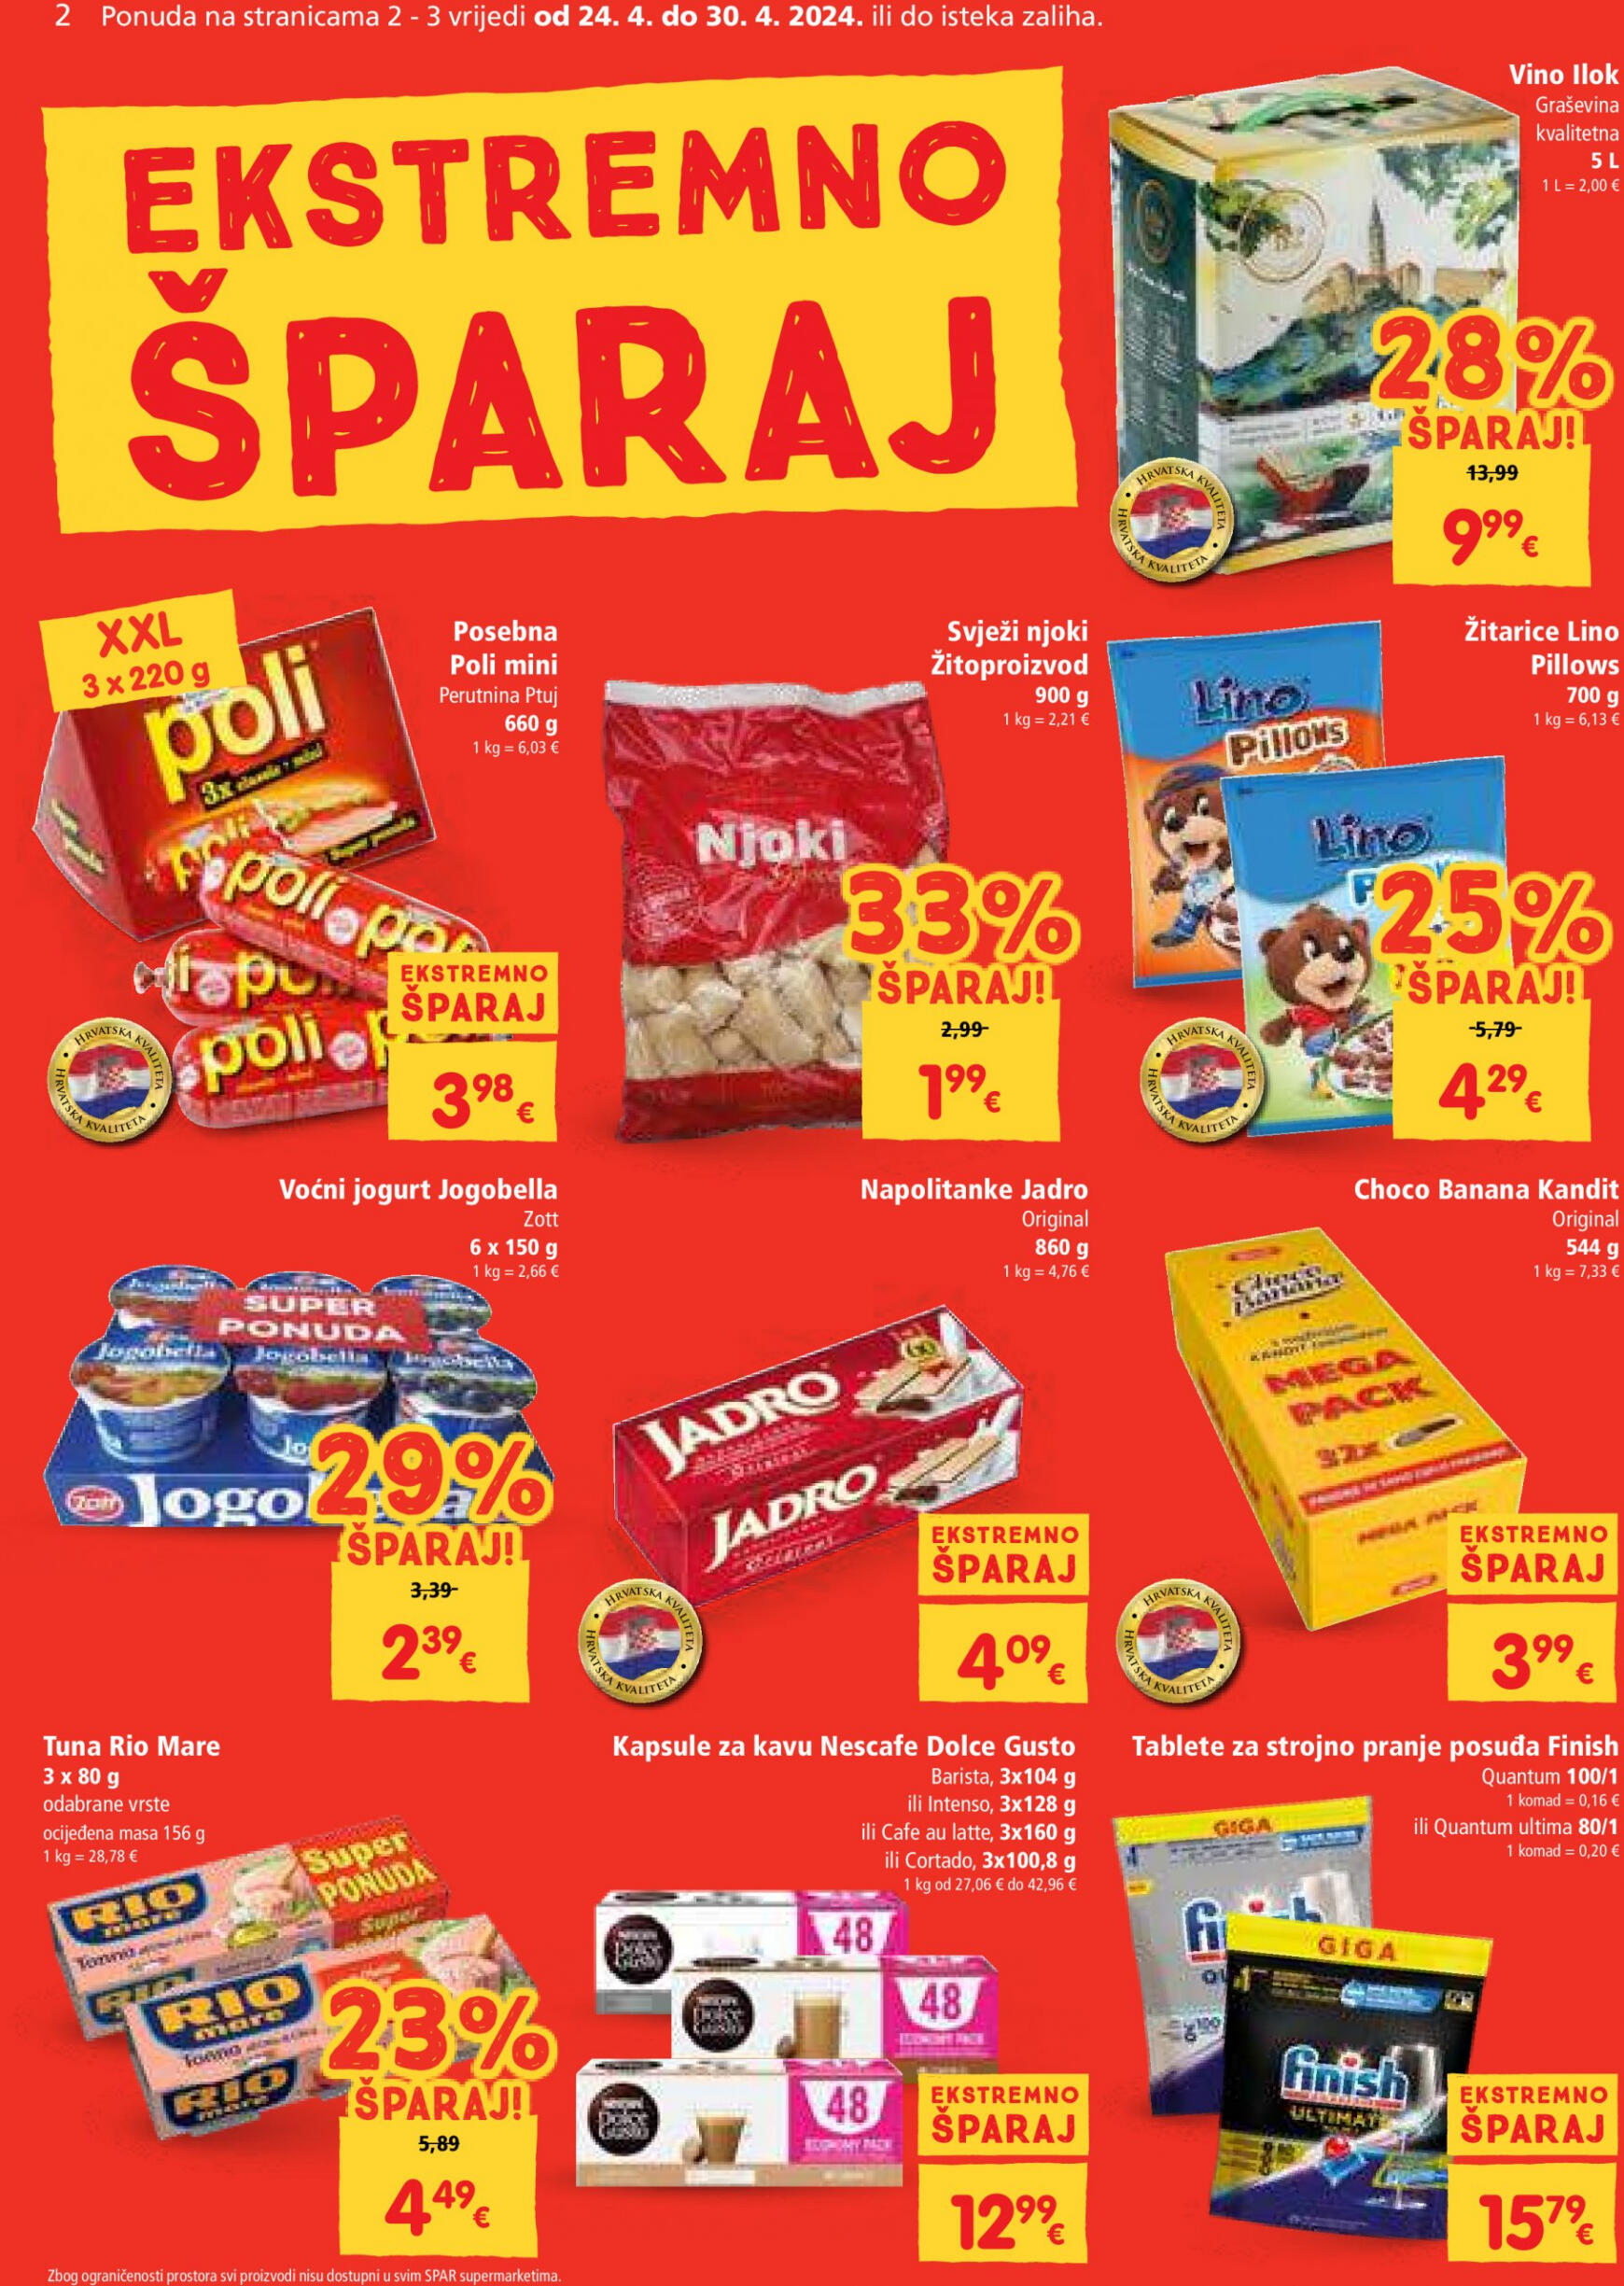 spar - Novi katalog SPAR 24.04. - 30.04. - page: 2